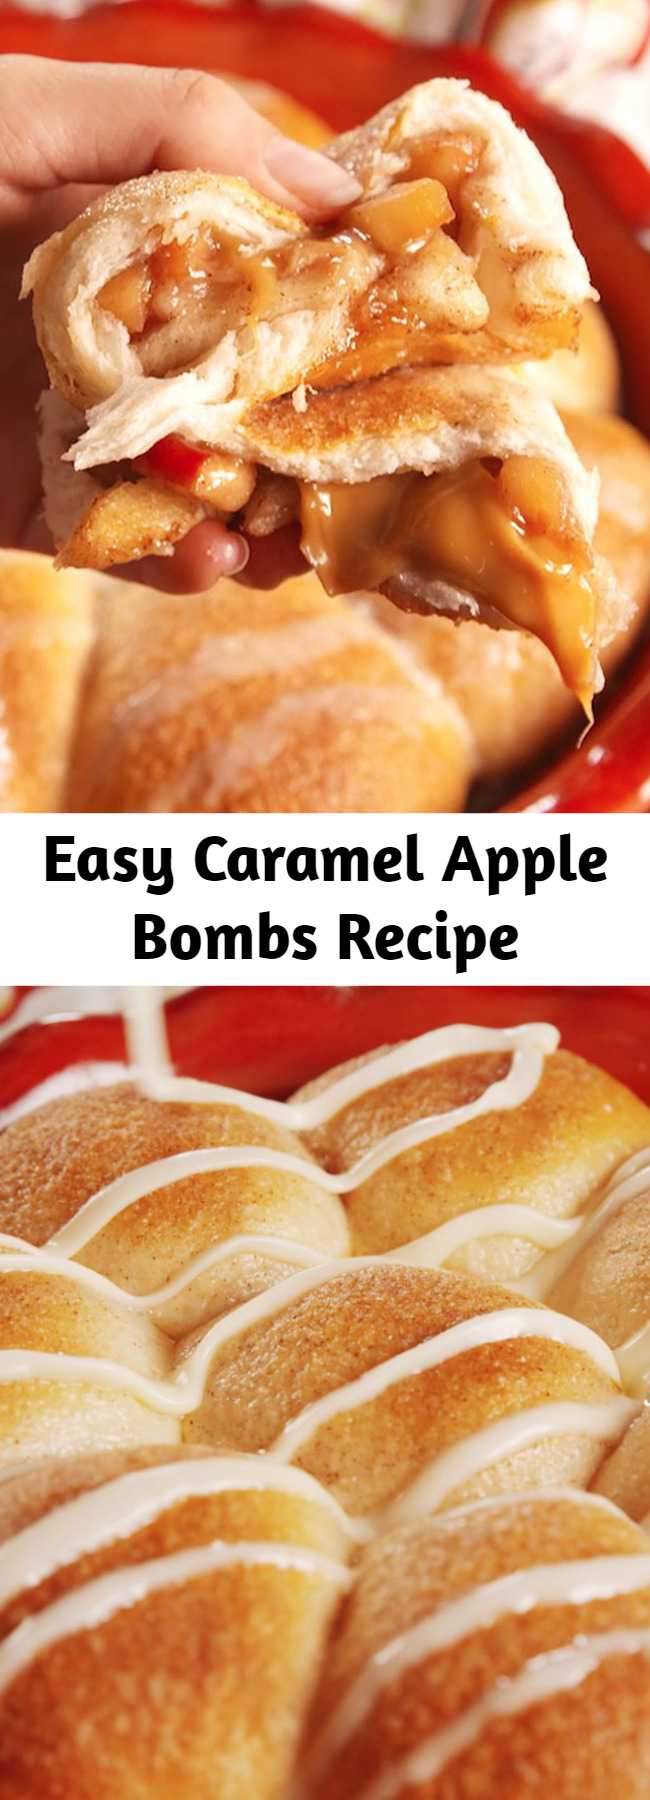 Easy Caramel Apple Bombs Recipe - The best way to get your caramel apple fix. #easy #recipe #caramel #apple #fall #homemade #dessert #stuffed #fallrecipe #food #easyrecipe #apples